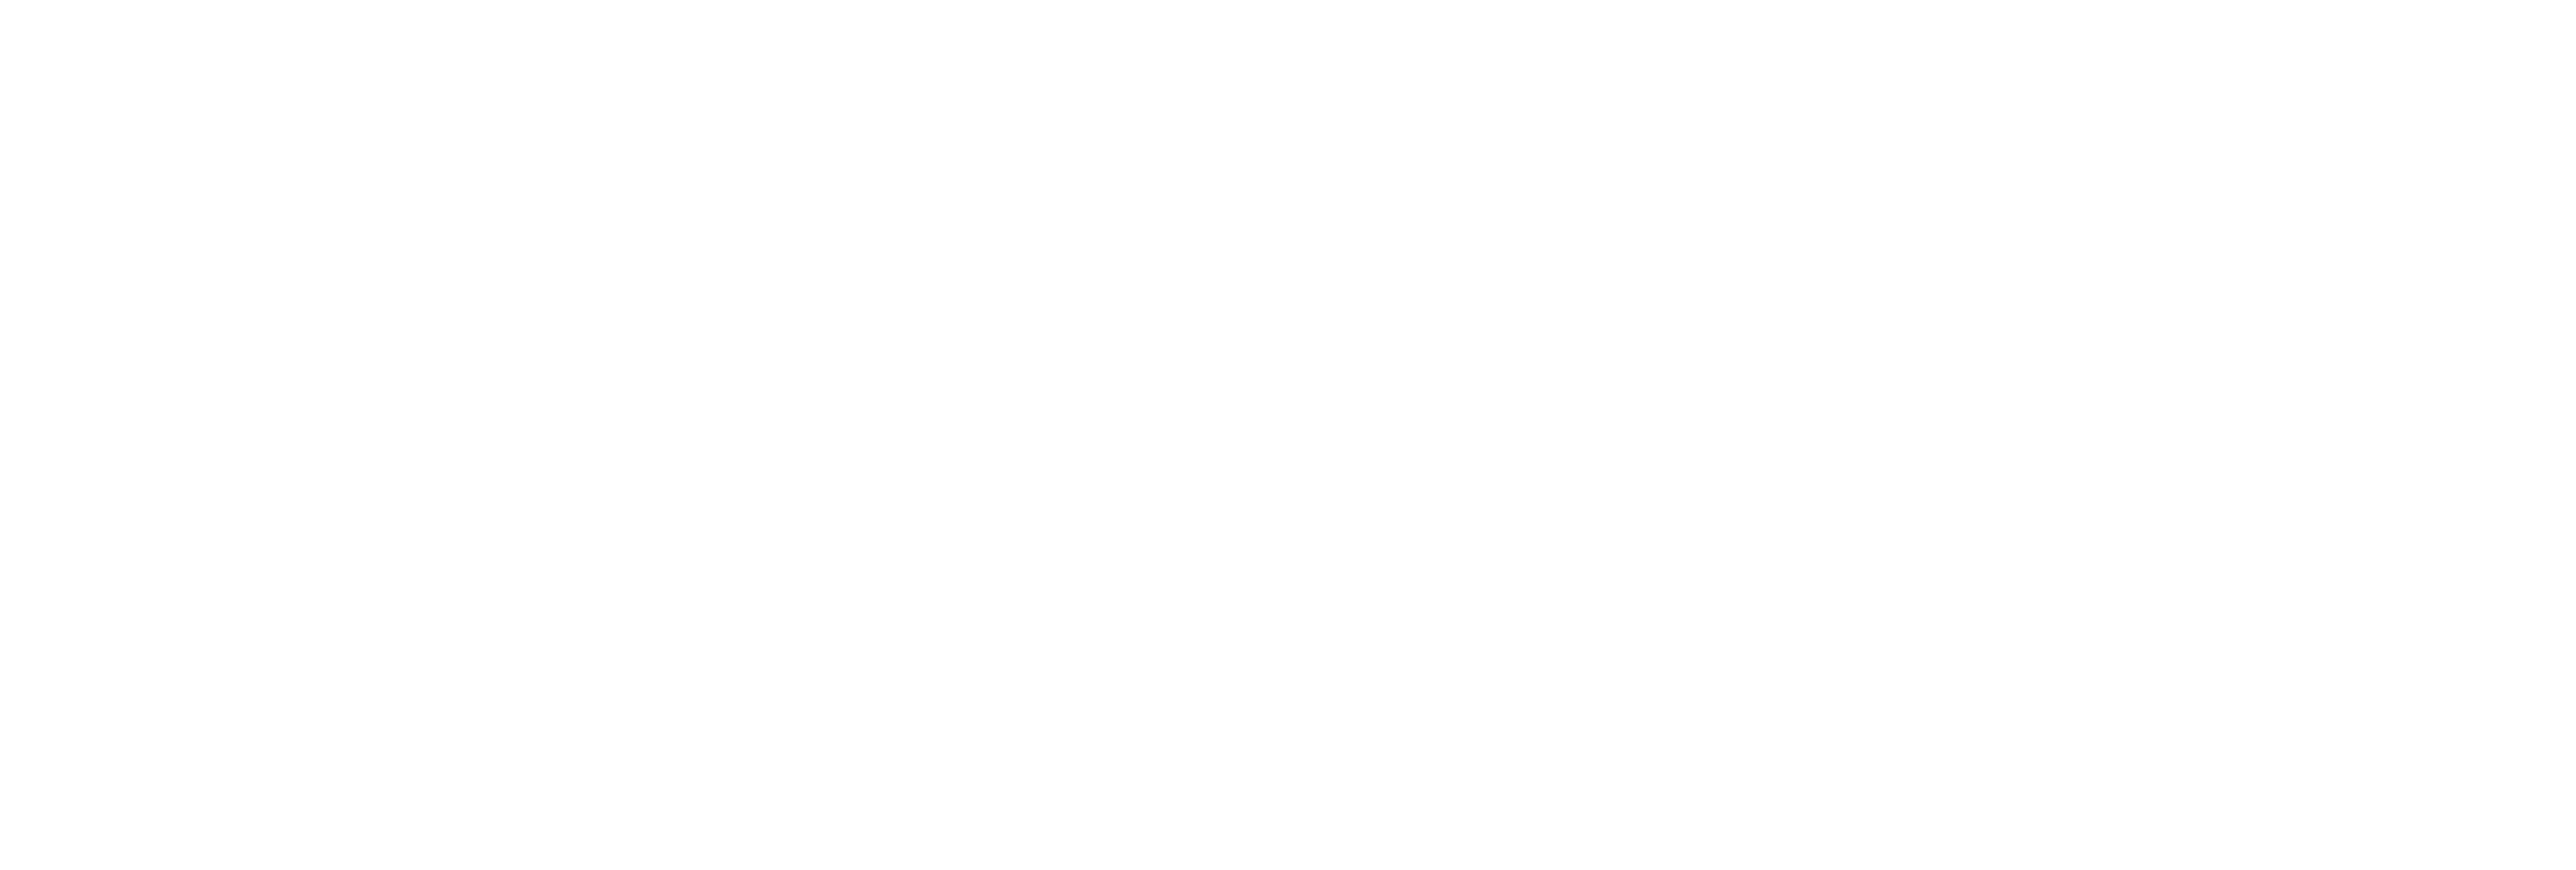 AniCura Familiedyrlægerne Aalborg logo